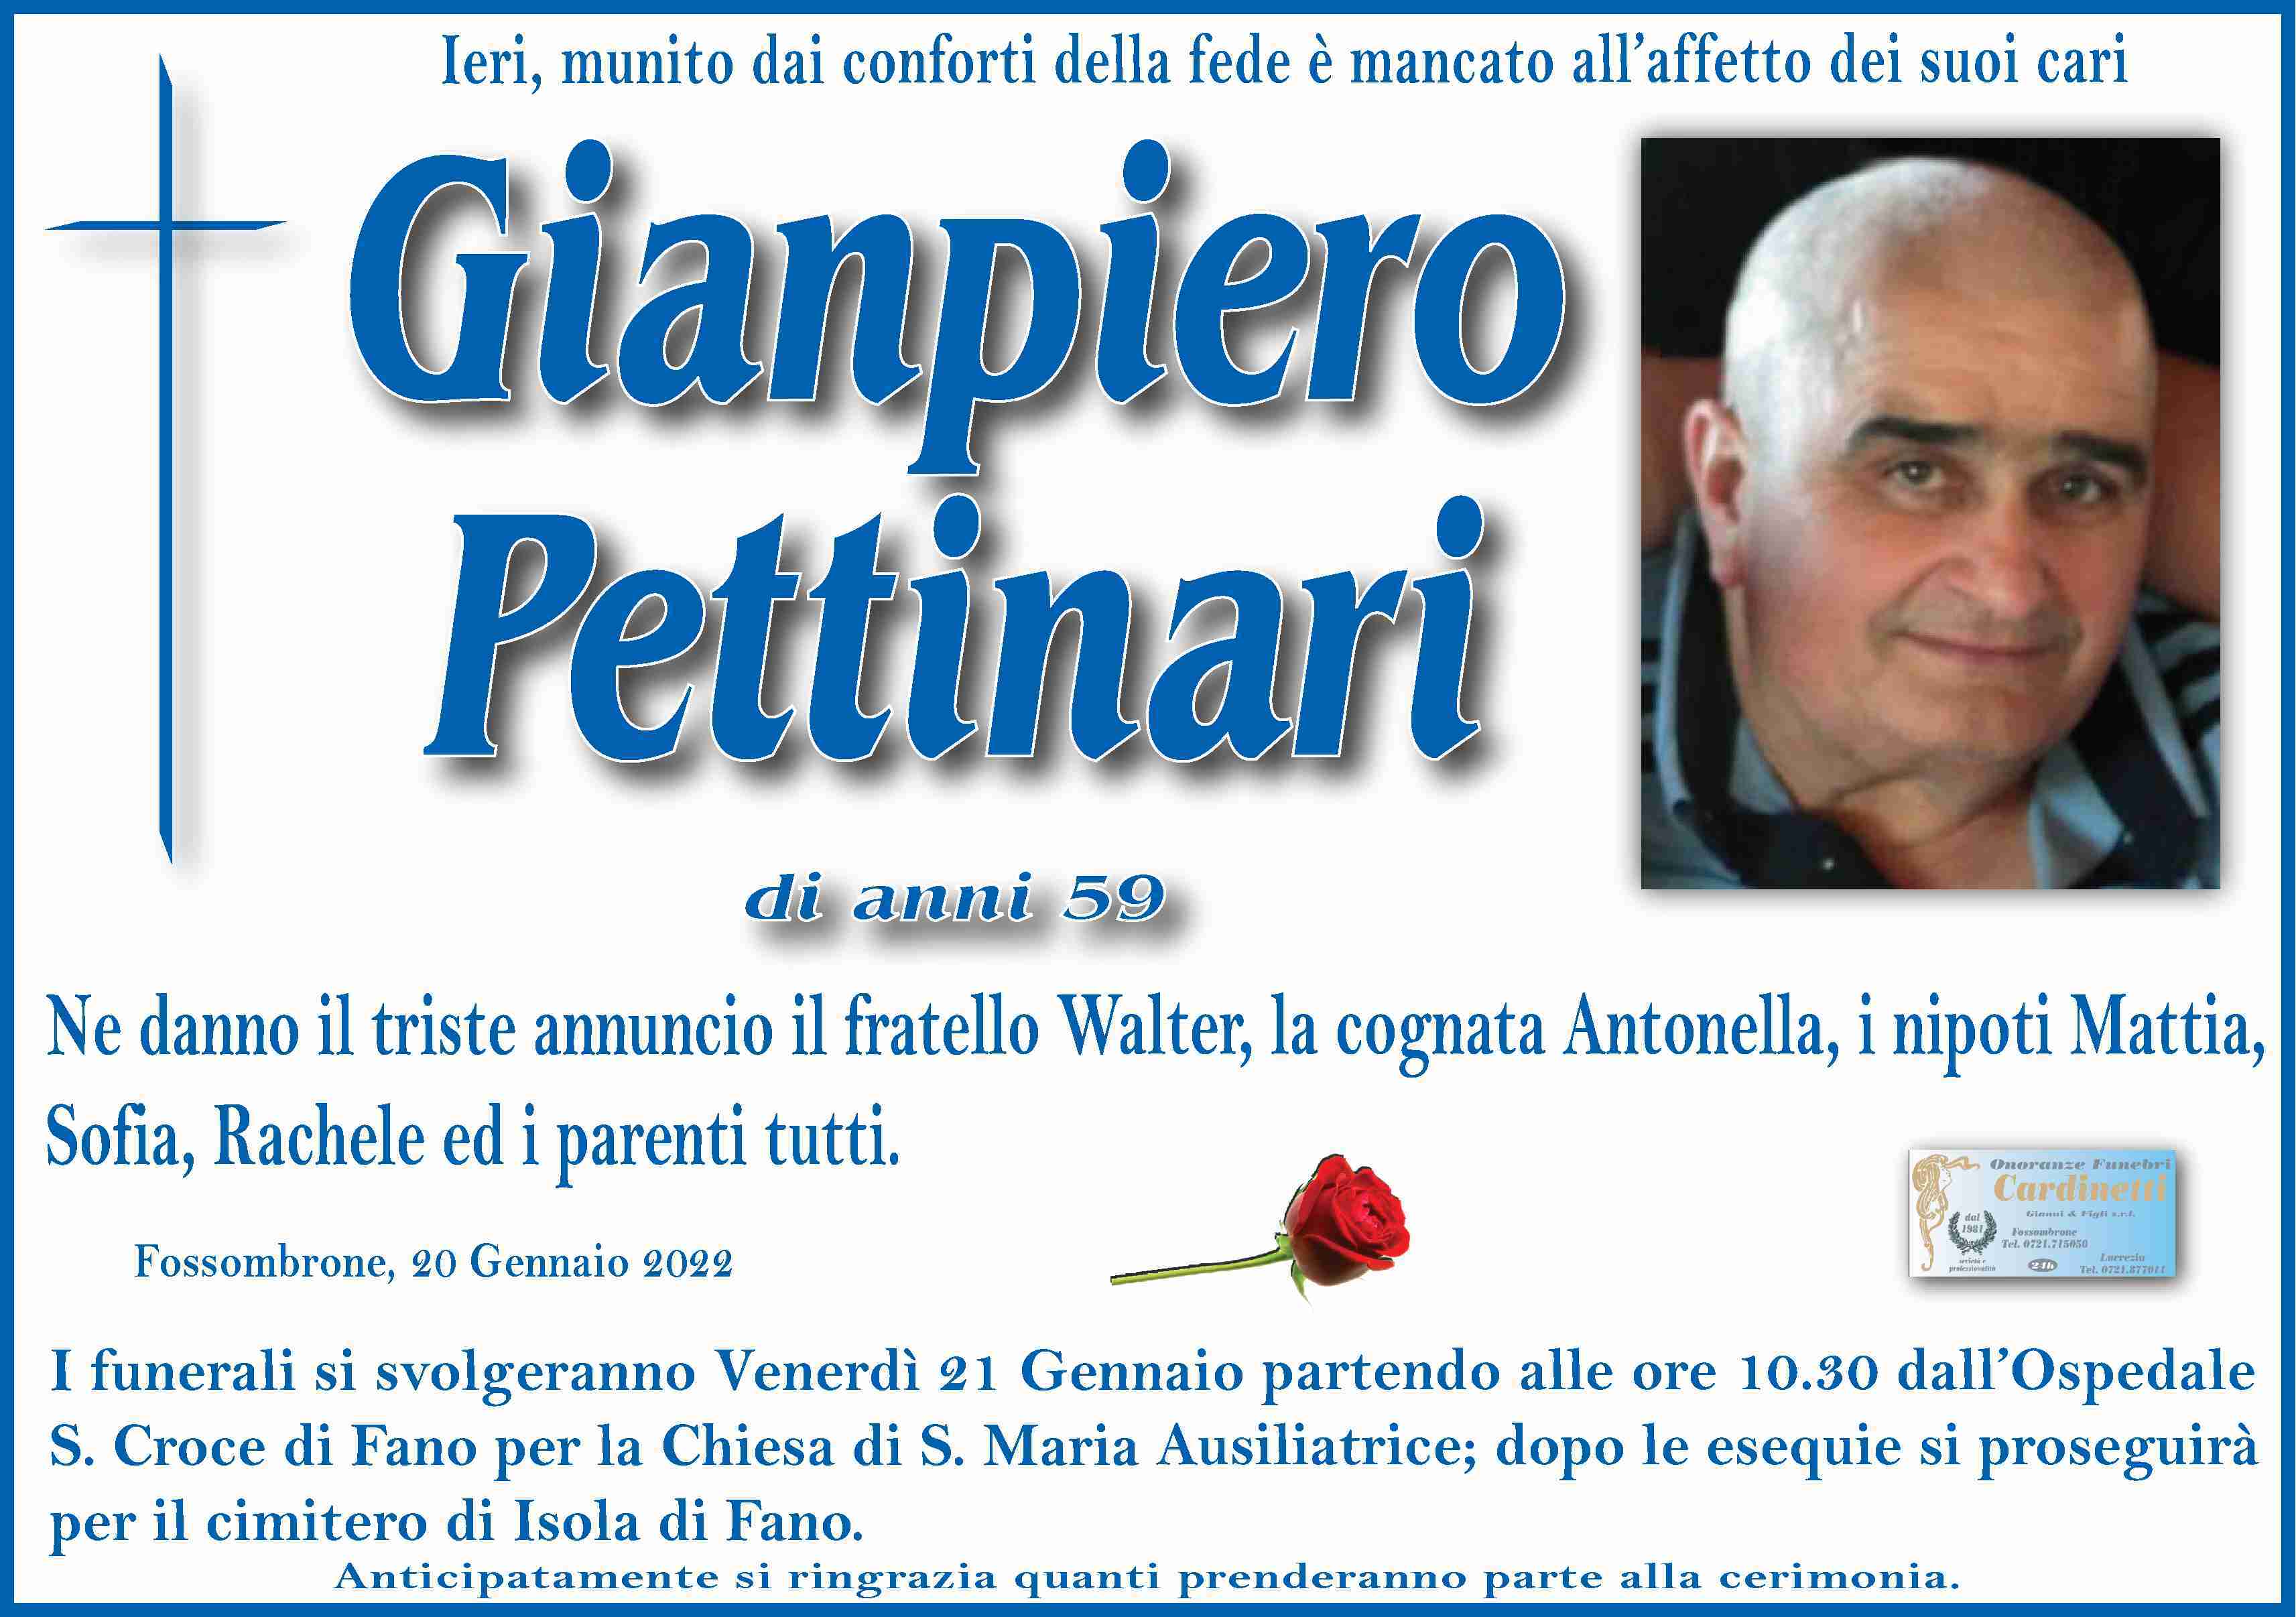 Gianpiero Pettinari